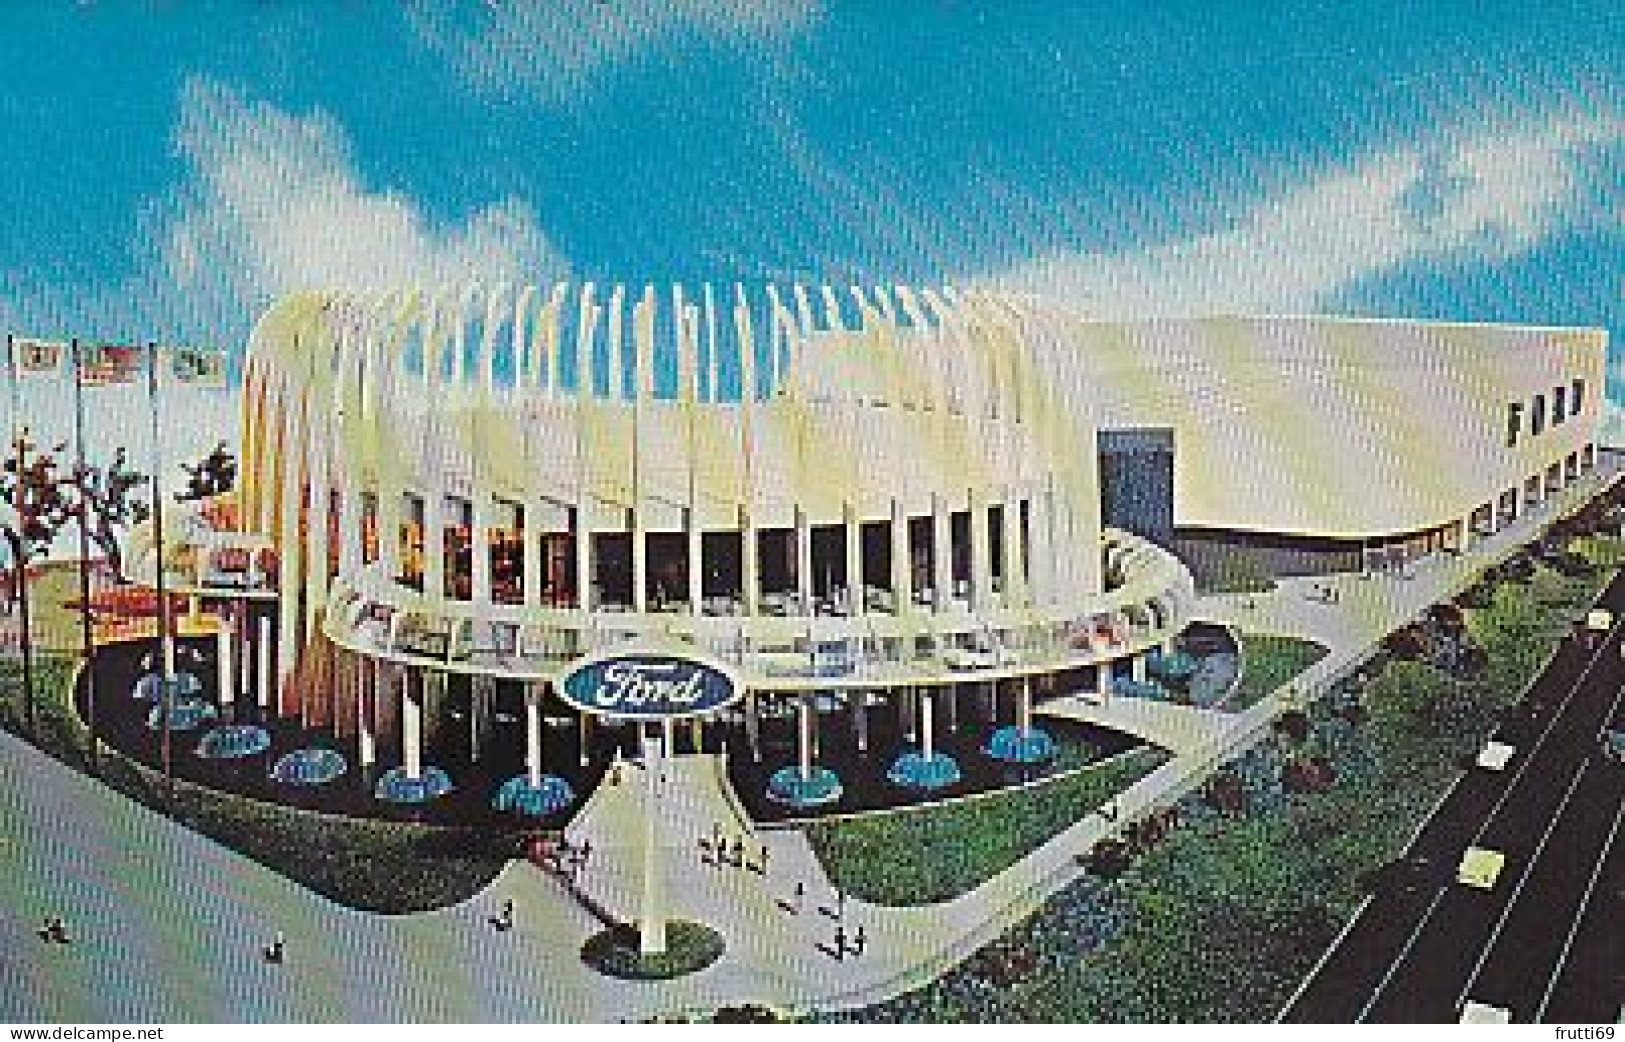 AK 215383 USA - New York World's Fair 1964-65 - Ford Motor Company Pavilion - Exposiciones